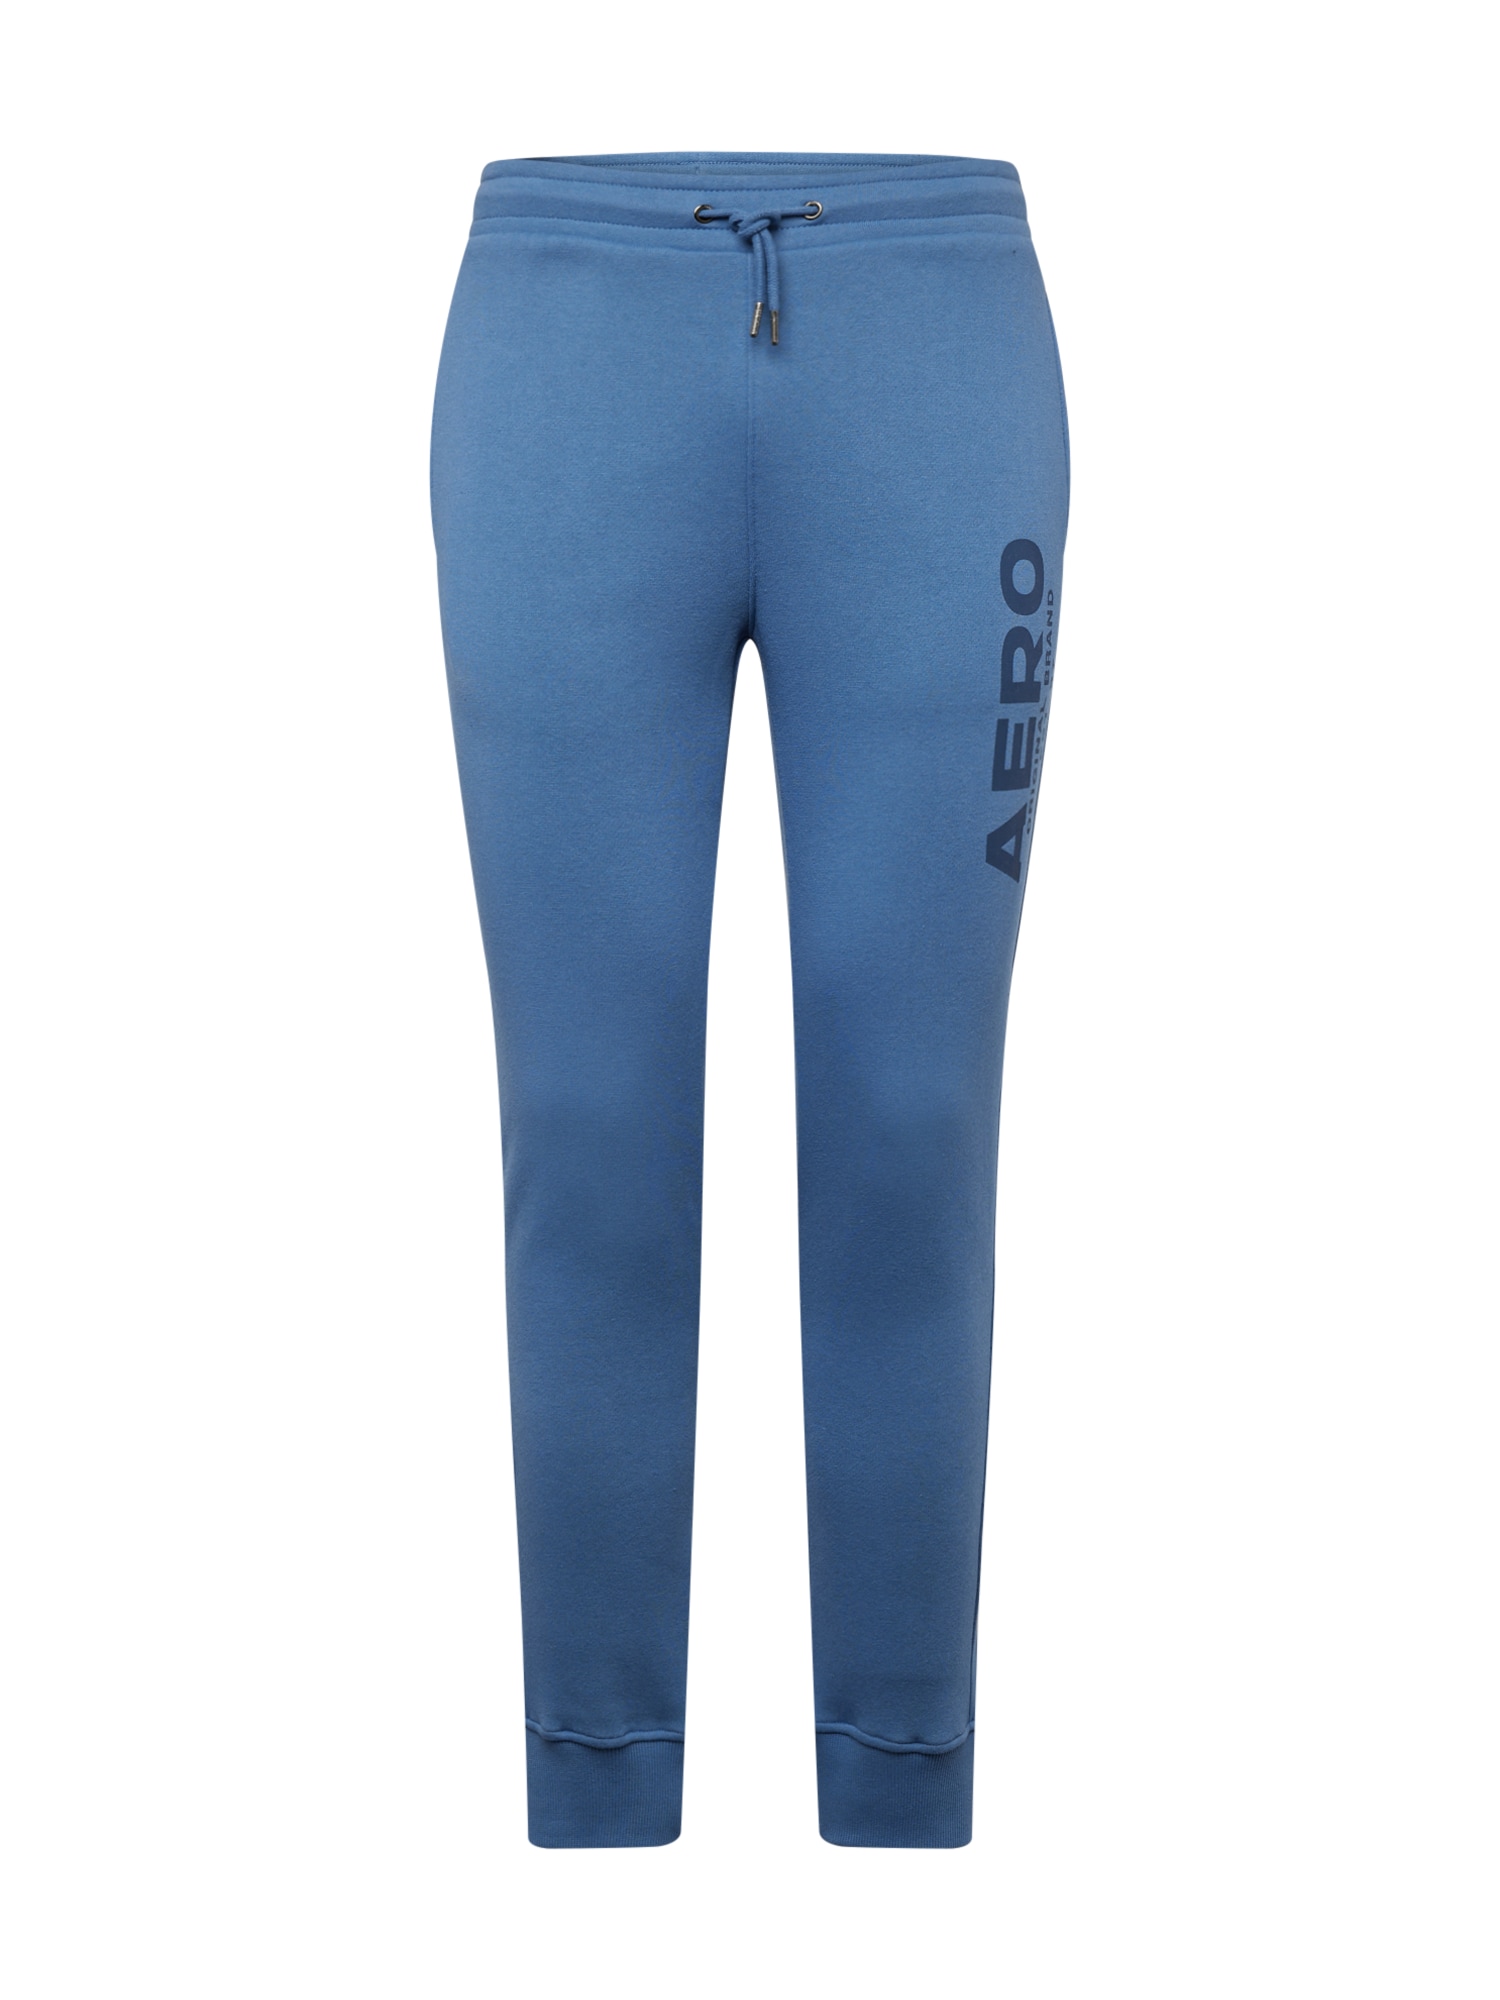 AÉROPOSTALE Sportinės kelnės 'AERO' mėlyna / tamsiai mėlyna